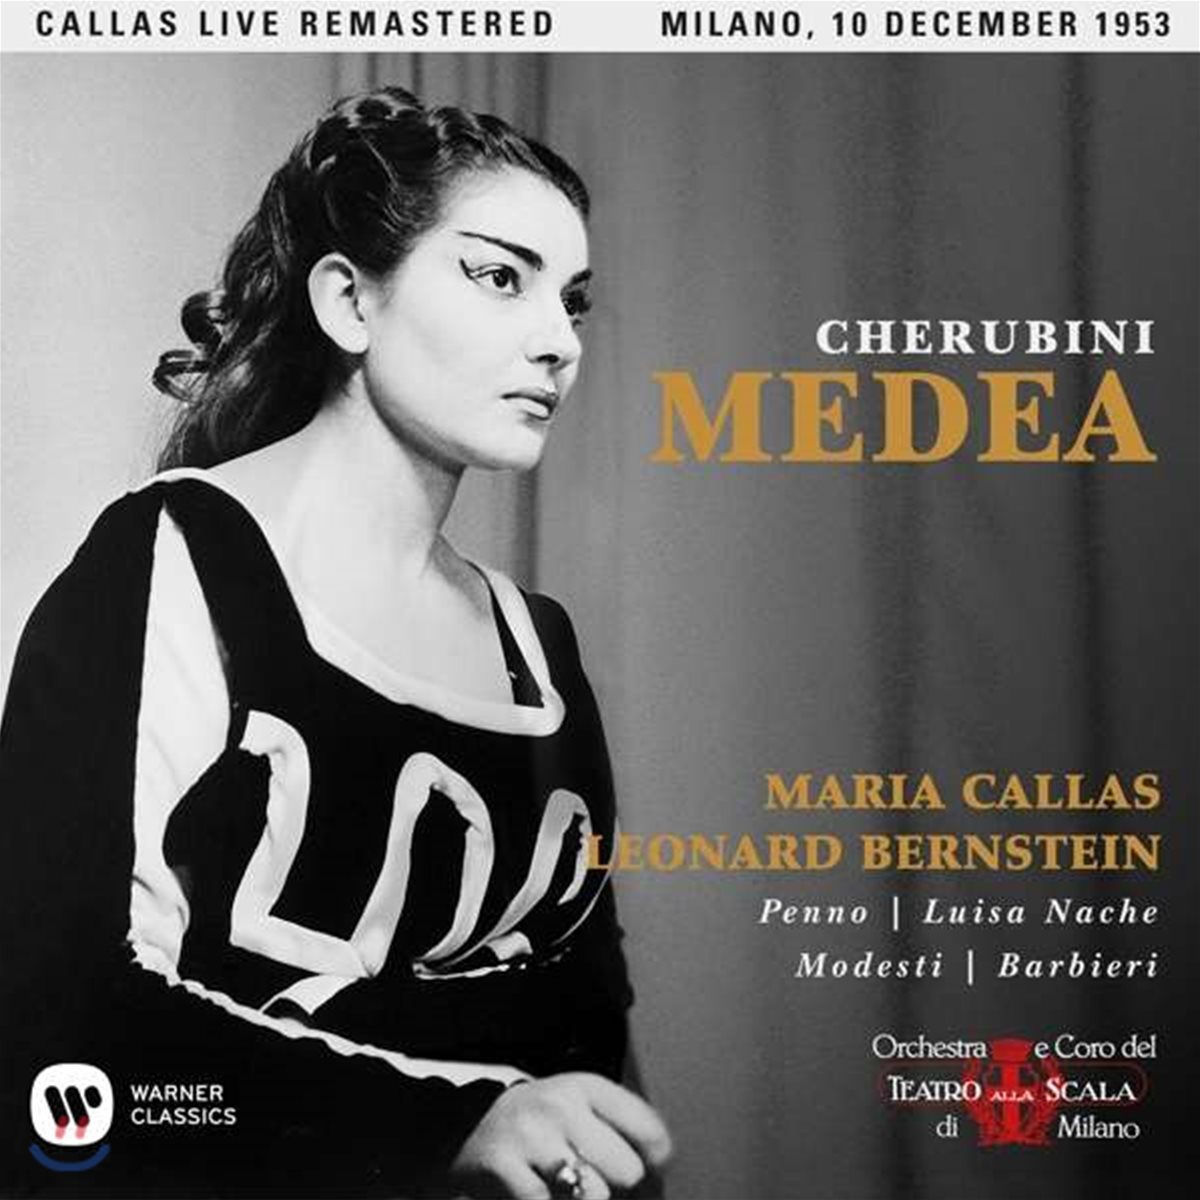 Maria Callas / Leonard Bernstein 케루비니: 메데아 - 마리아 칼라스, 레너드 번스타인 / 1953년 밀라노 라 스칼라 실황 (Cherubini: Medea)